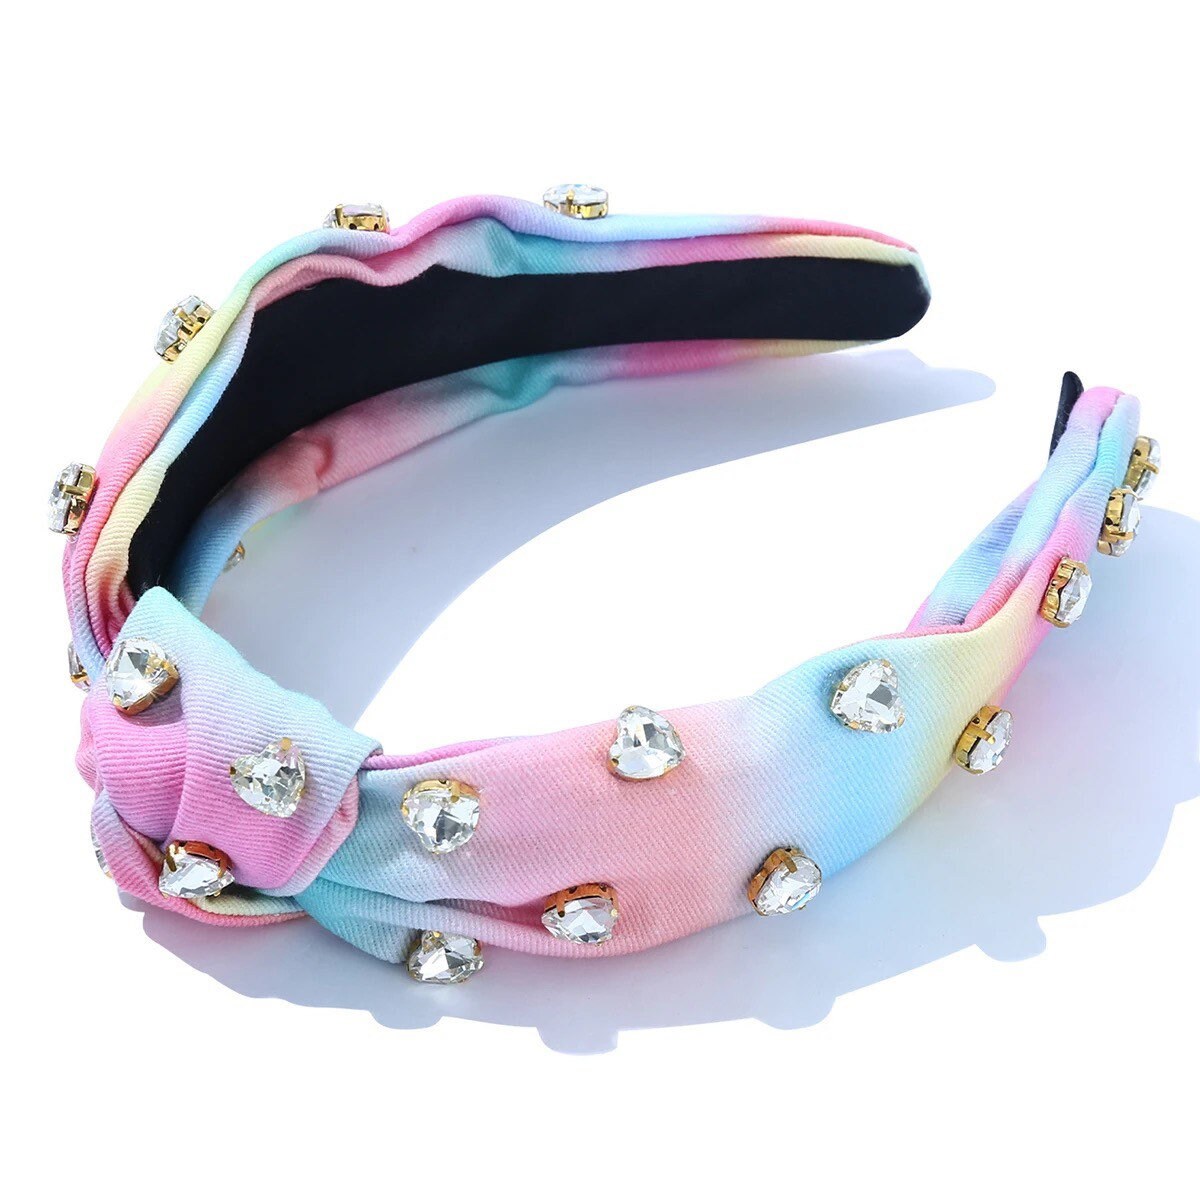 NEW Knotted Headbands- Crystal Bling Headbands with jewels- Tie Dye Headband- Easter Headband- Designer Headband- Heart Headband